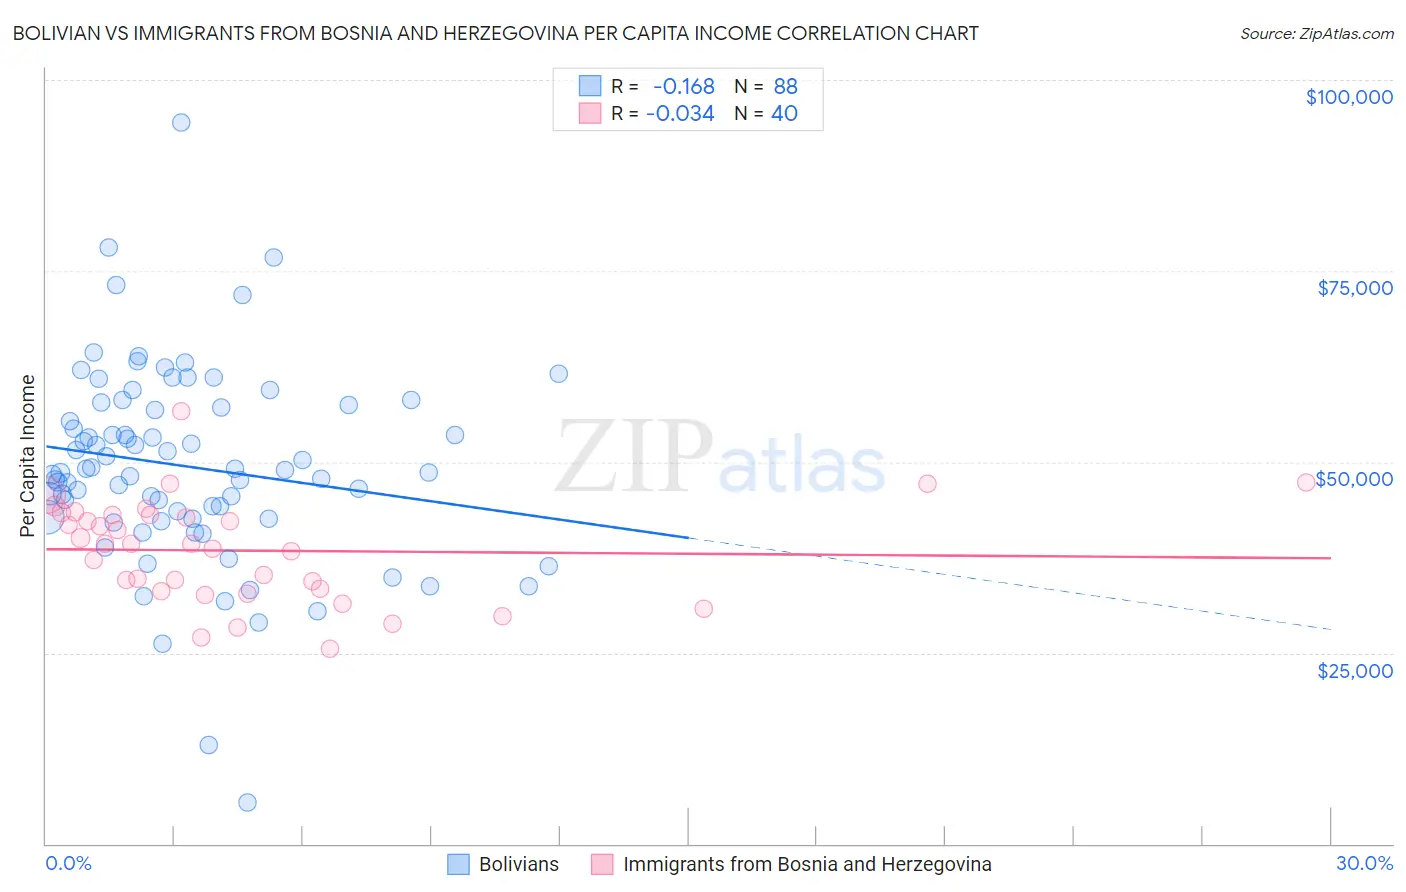 Bolivian vs Immigrants from Bosnia and Herzegovina Per Capita Income